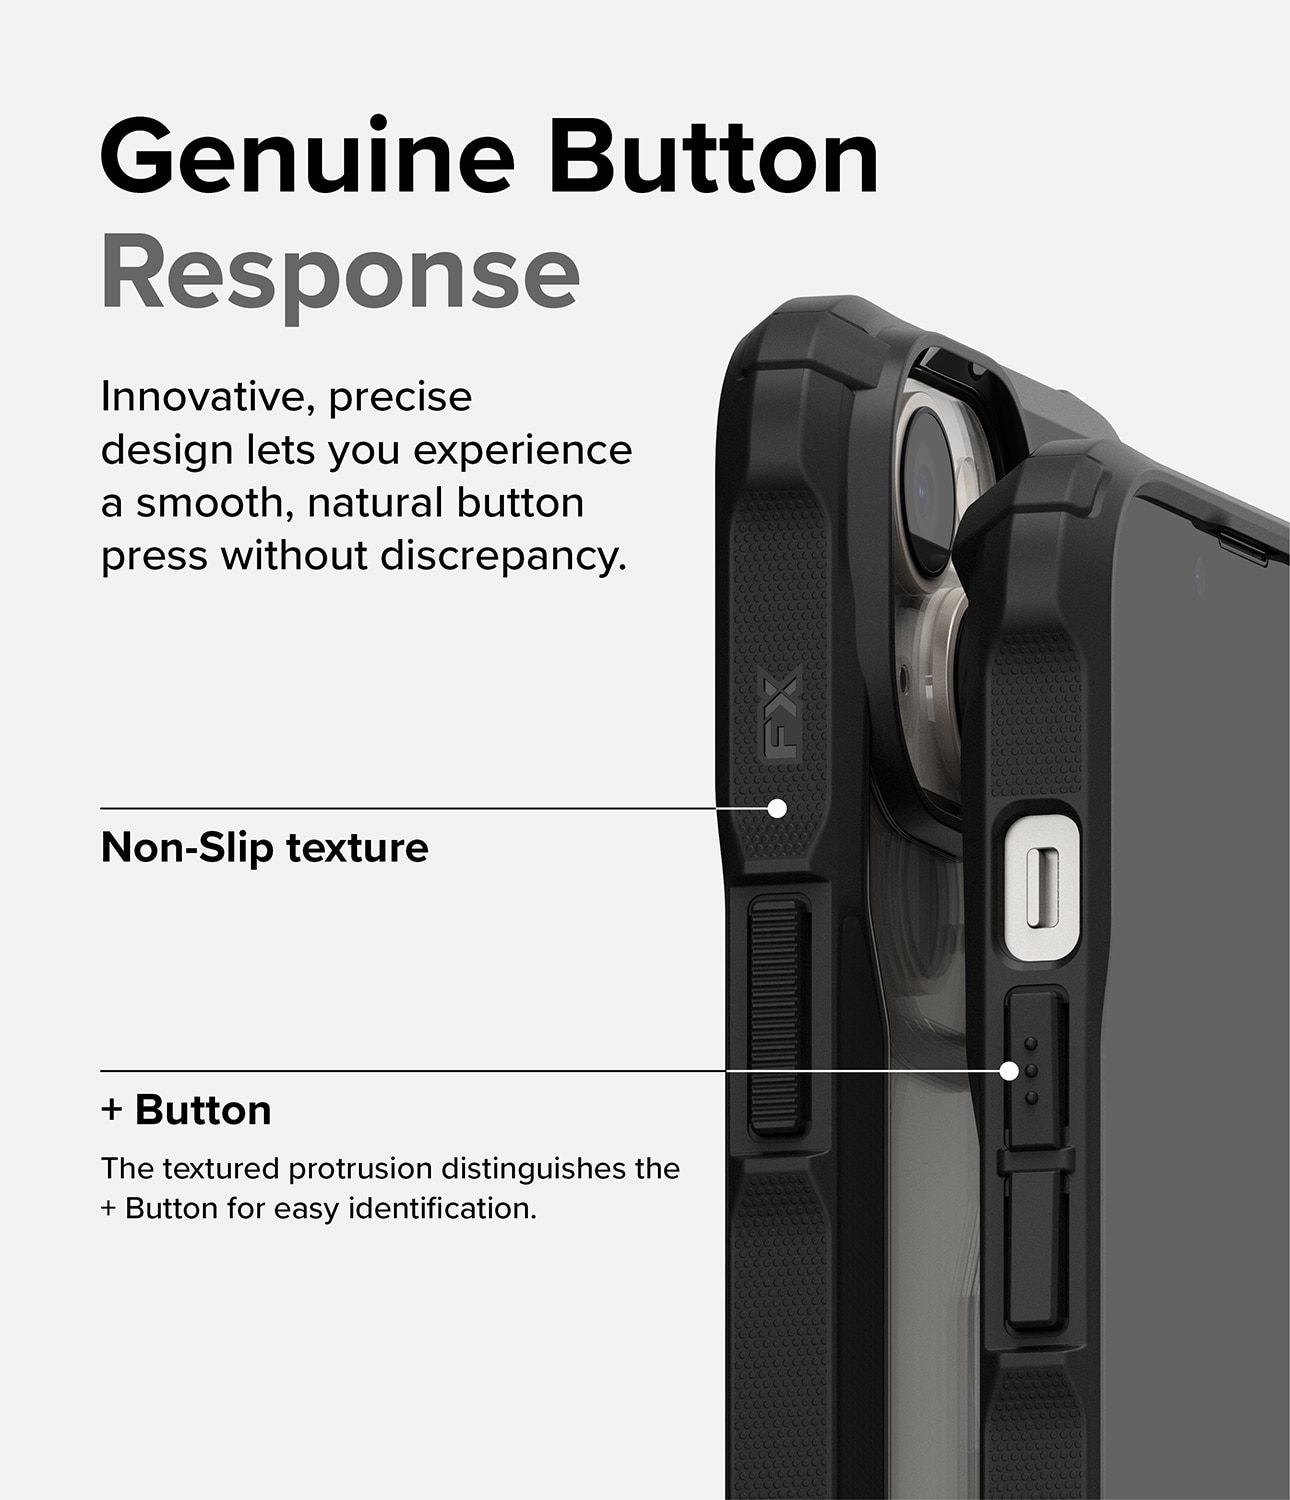 iPhone 14 Fusion X Skal, svart/genomskinlig